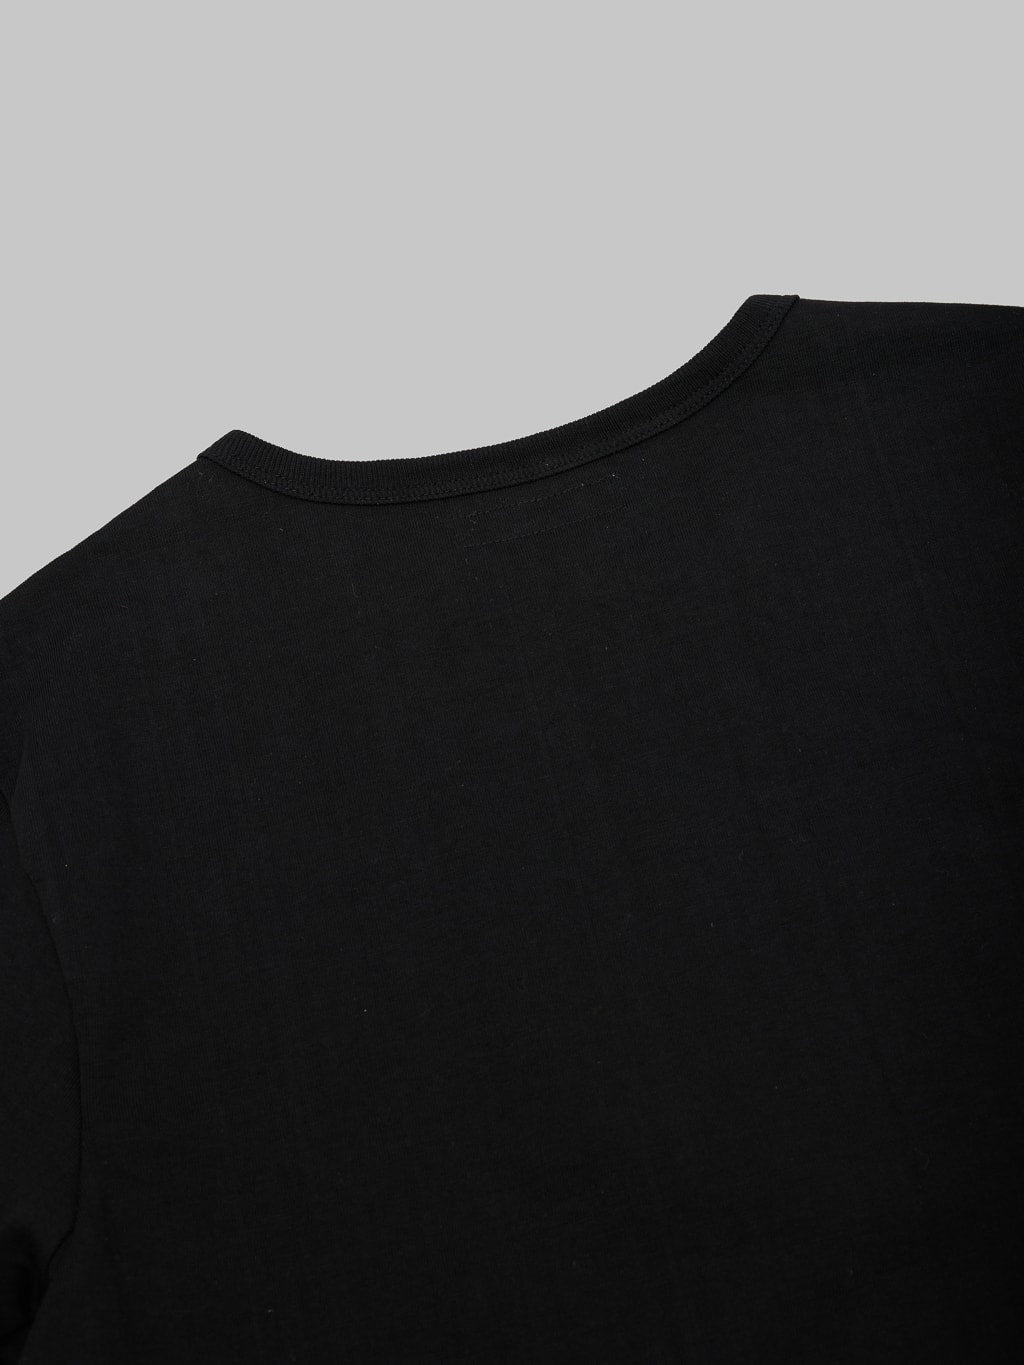 merz b schwanen good originals loopwheeled Tshirt classic fit black back collar